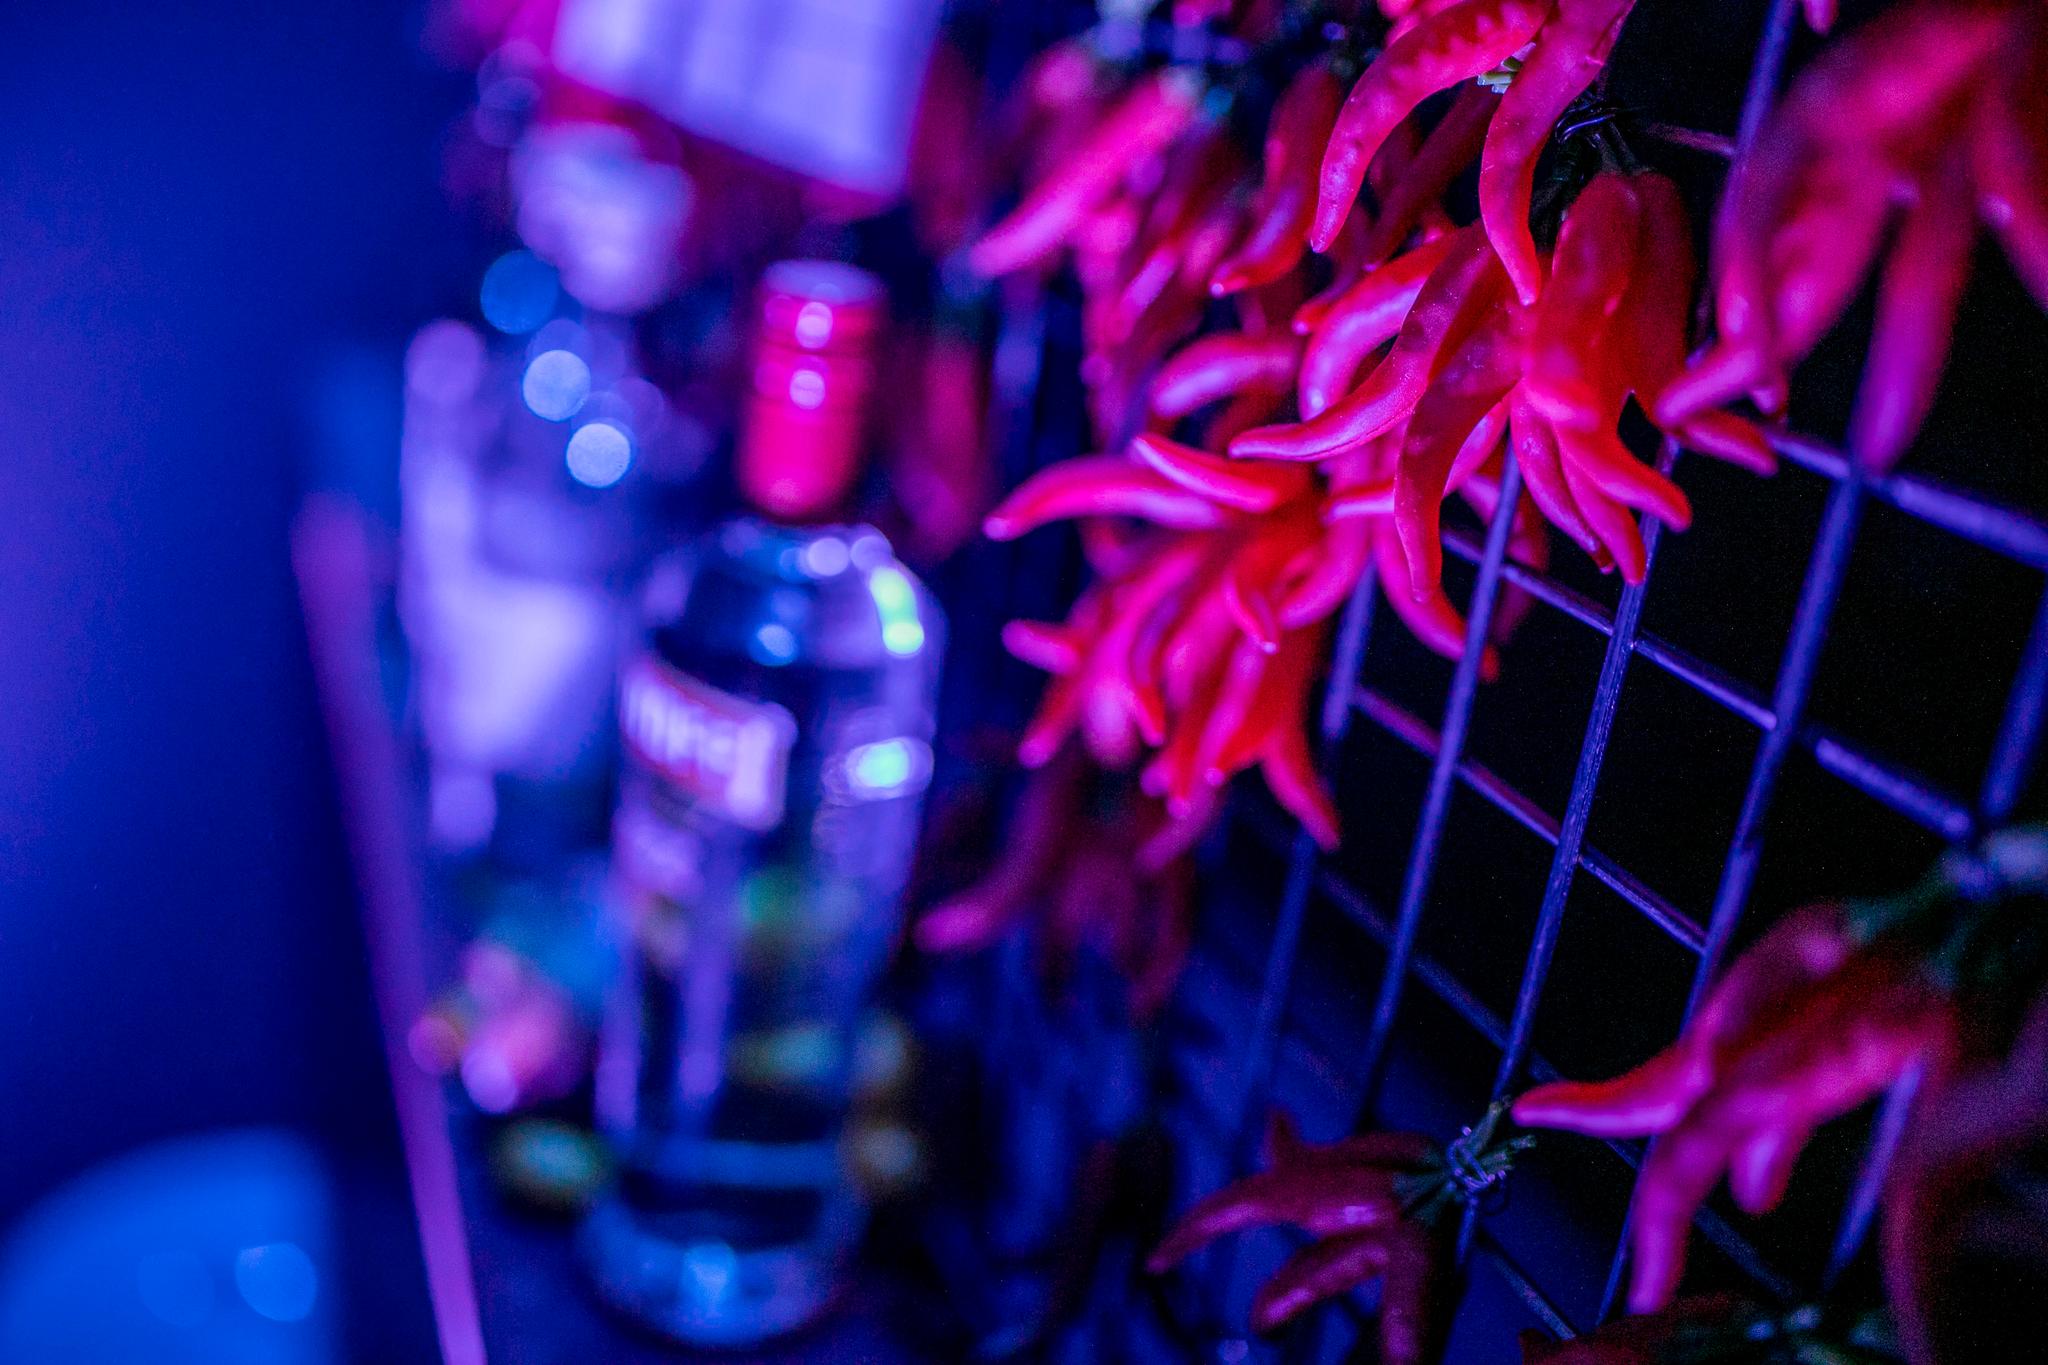 Detail shot of chilis at the bar in a club environment.